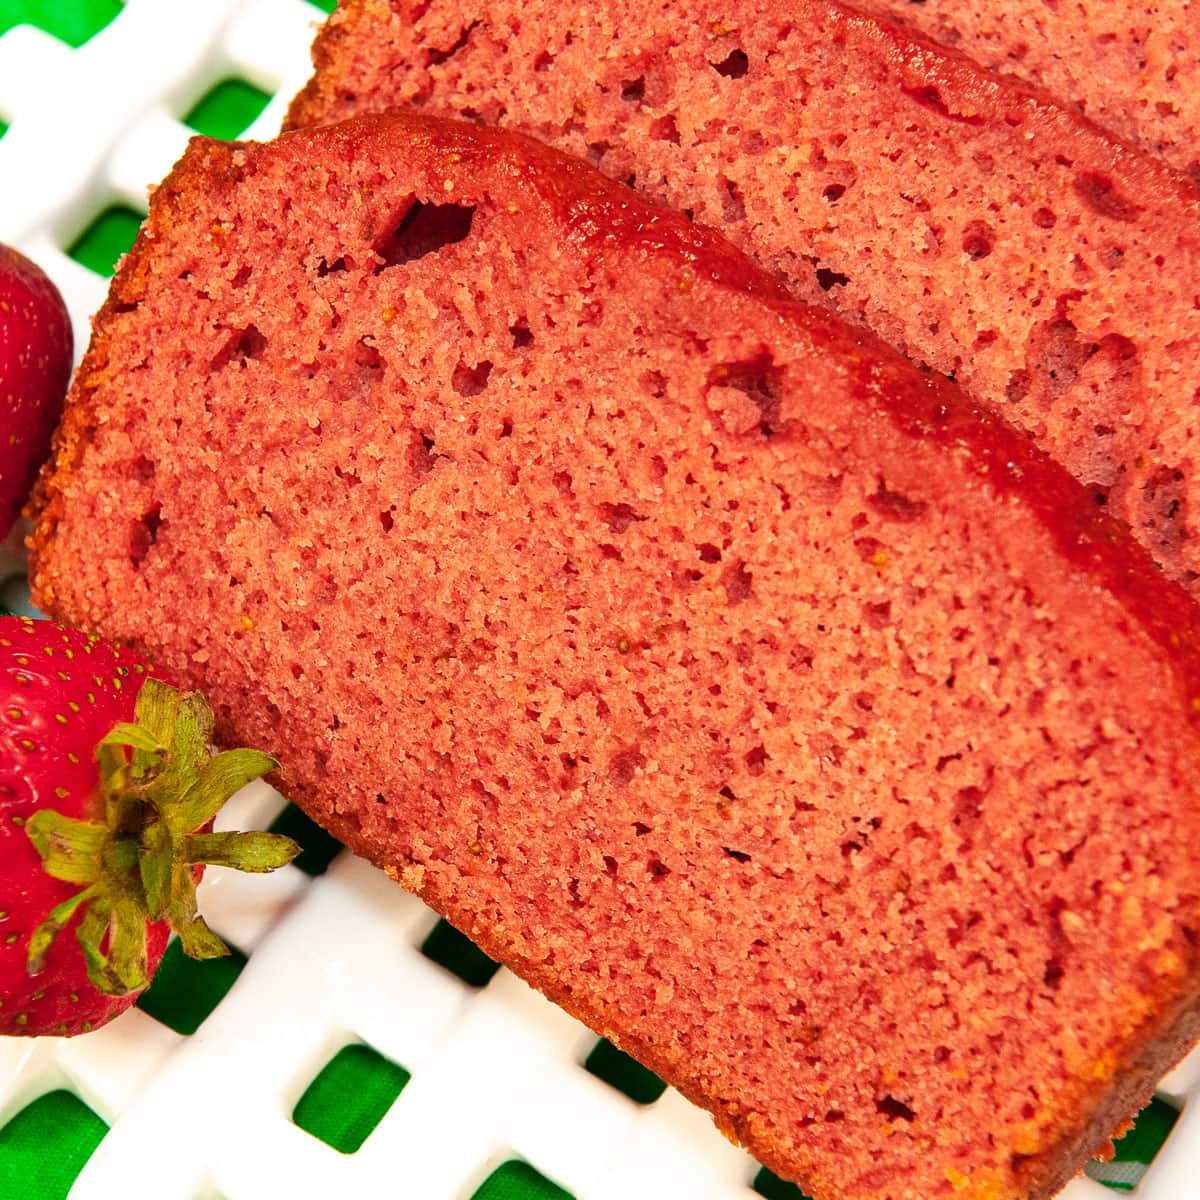 Slices of Strawberry Bread on a lattice plate.